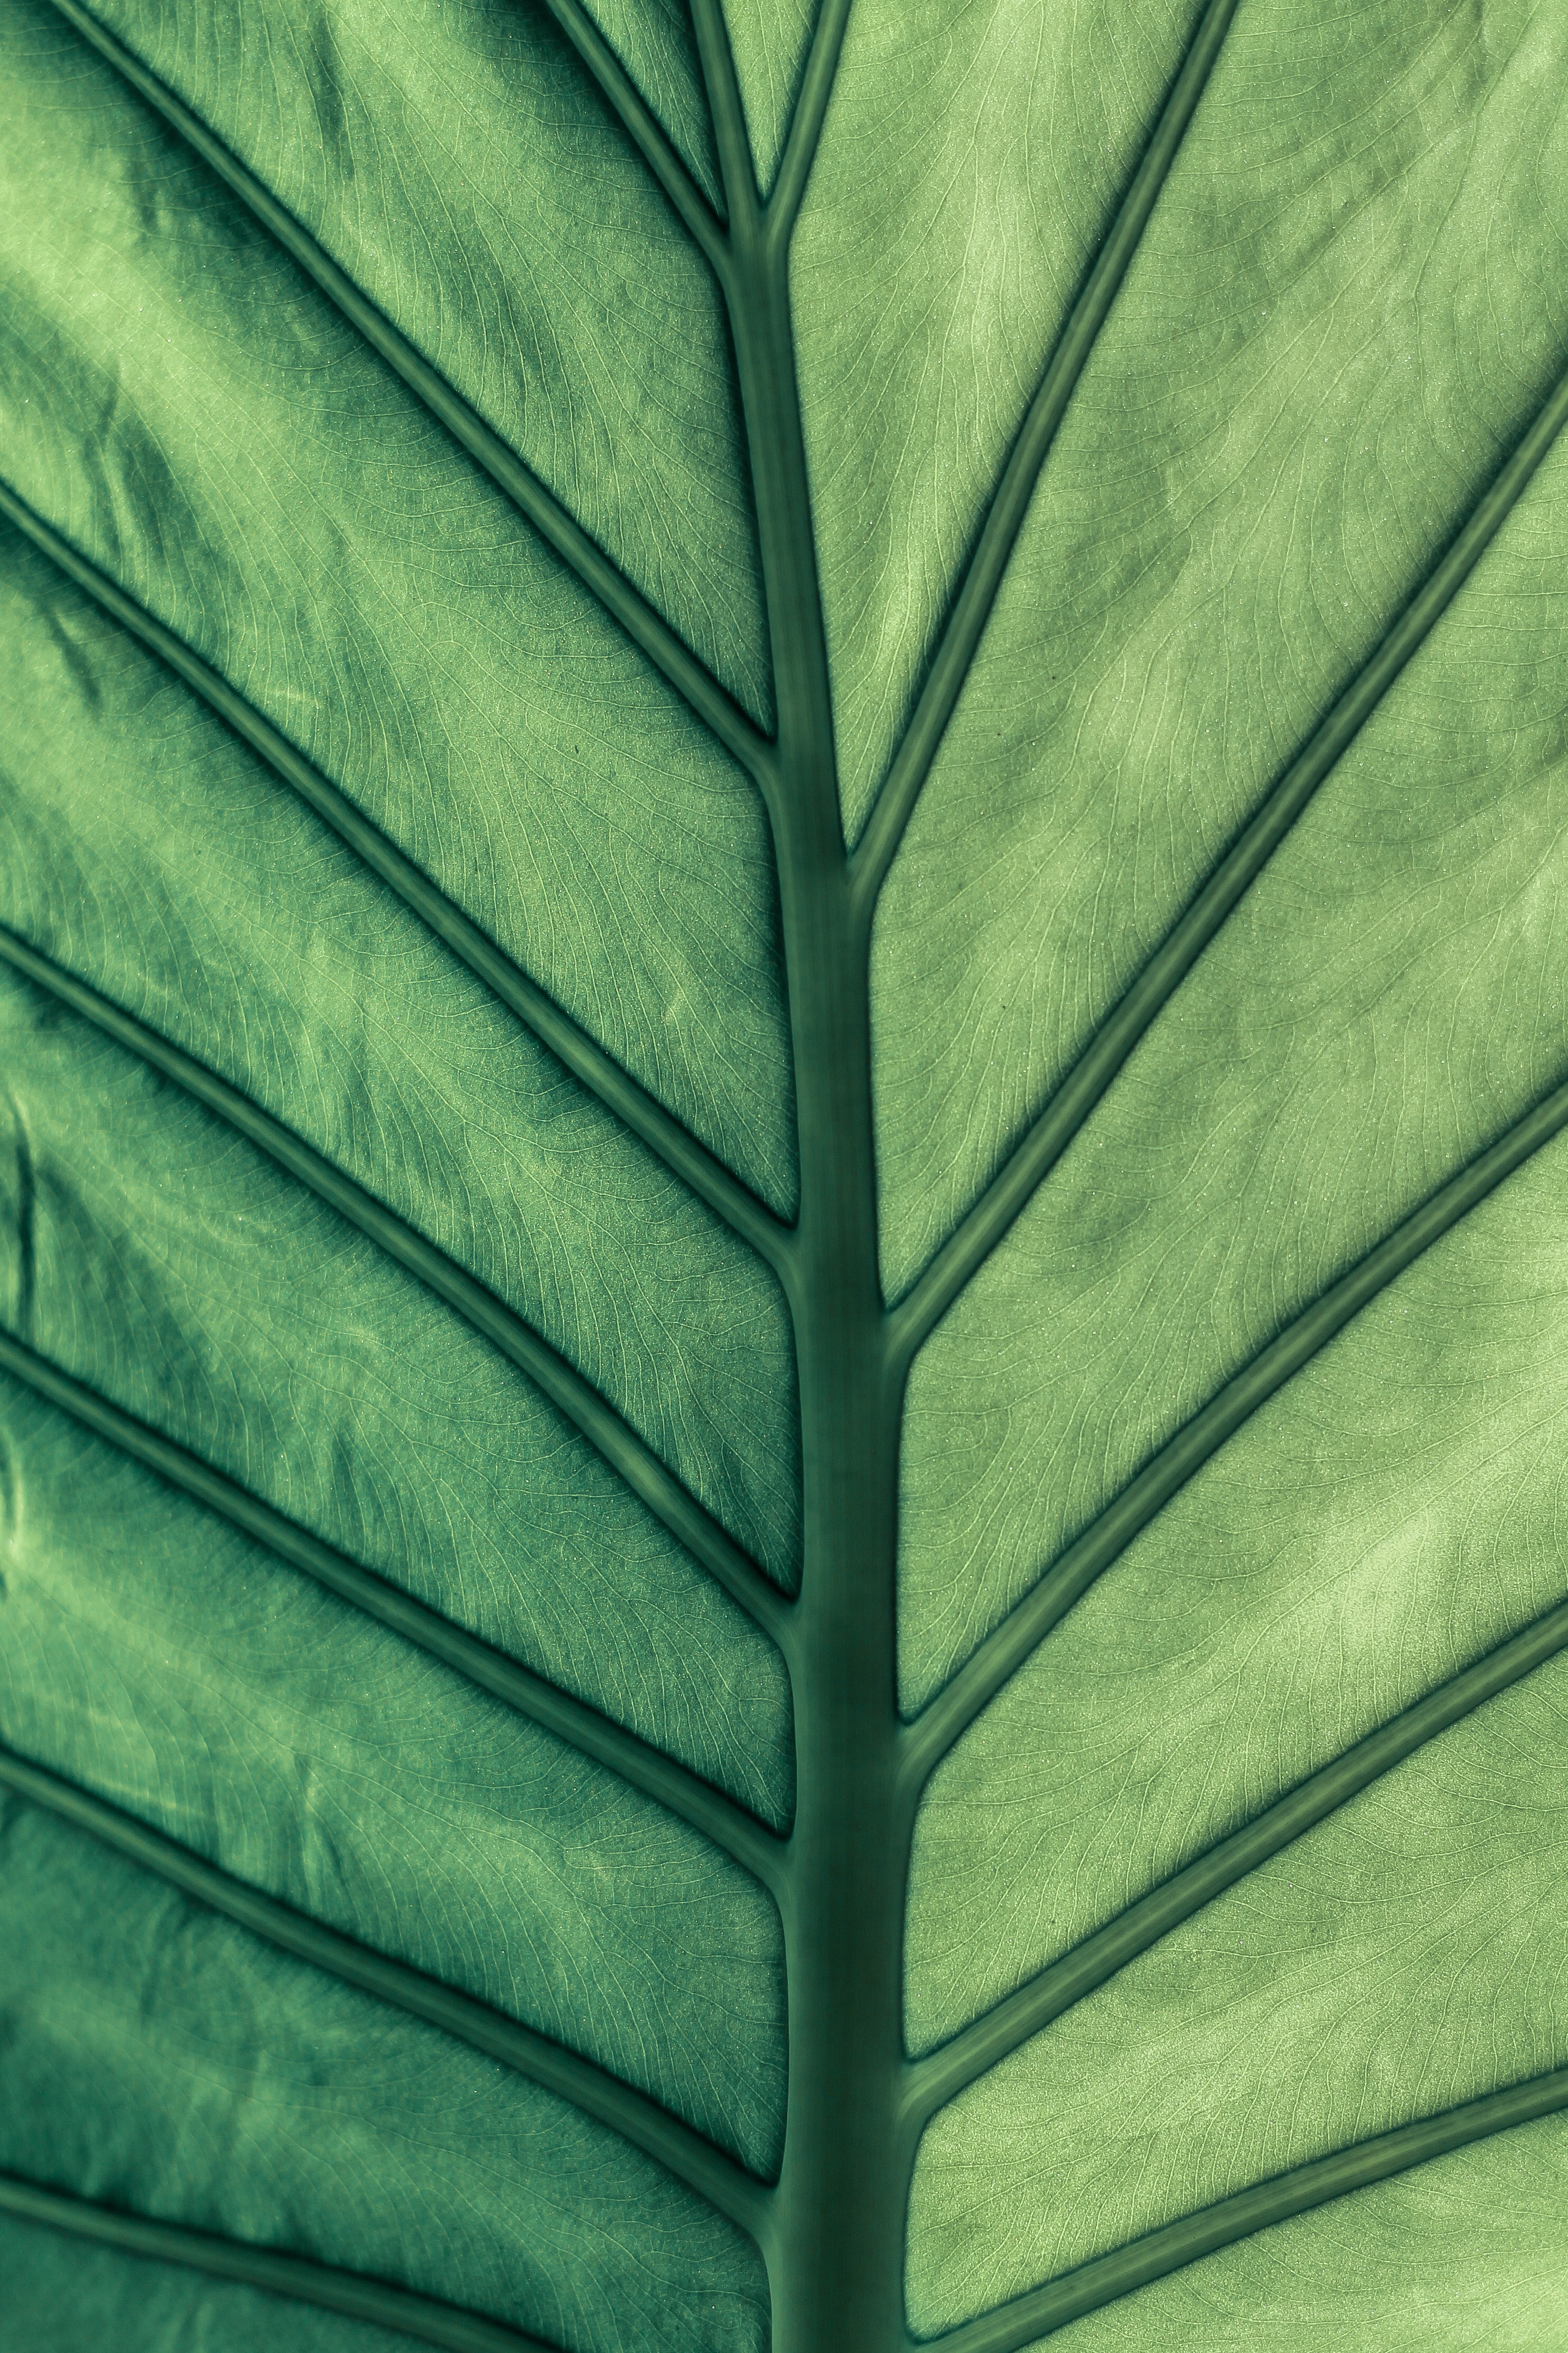 QHD wallpaper macro, sheet, green, leaf